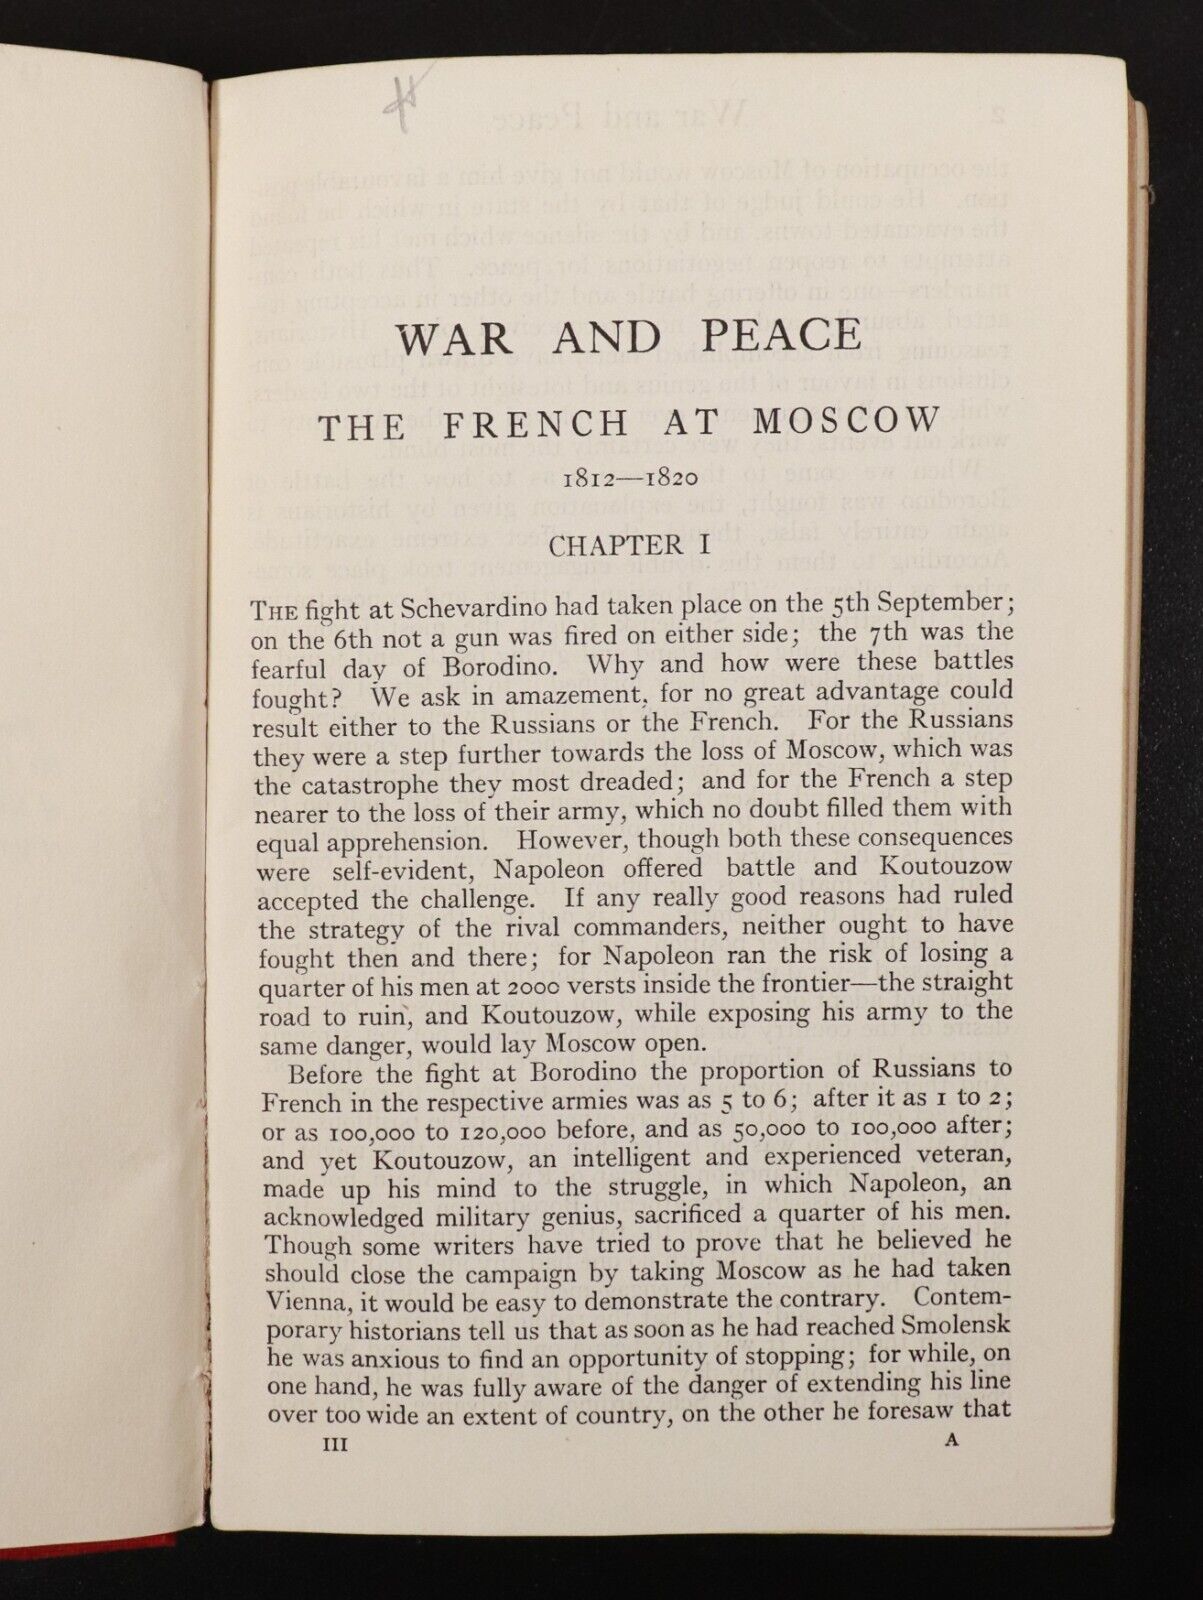 c1910 3vol War & Peace by Count Leo N. Tolstoy Antique Classic Fiction Book Set